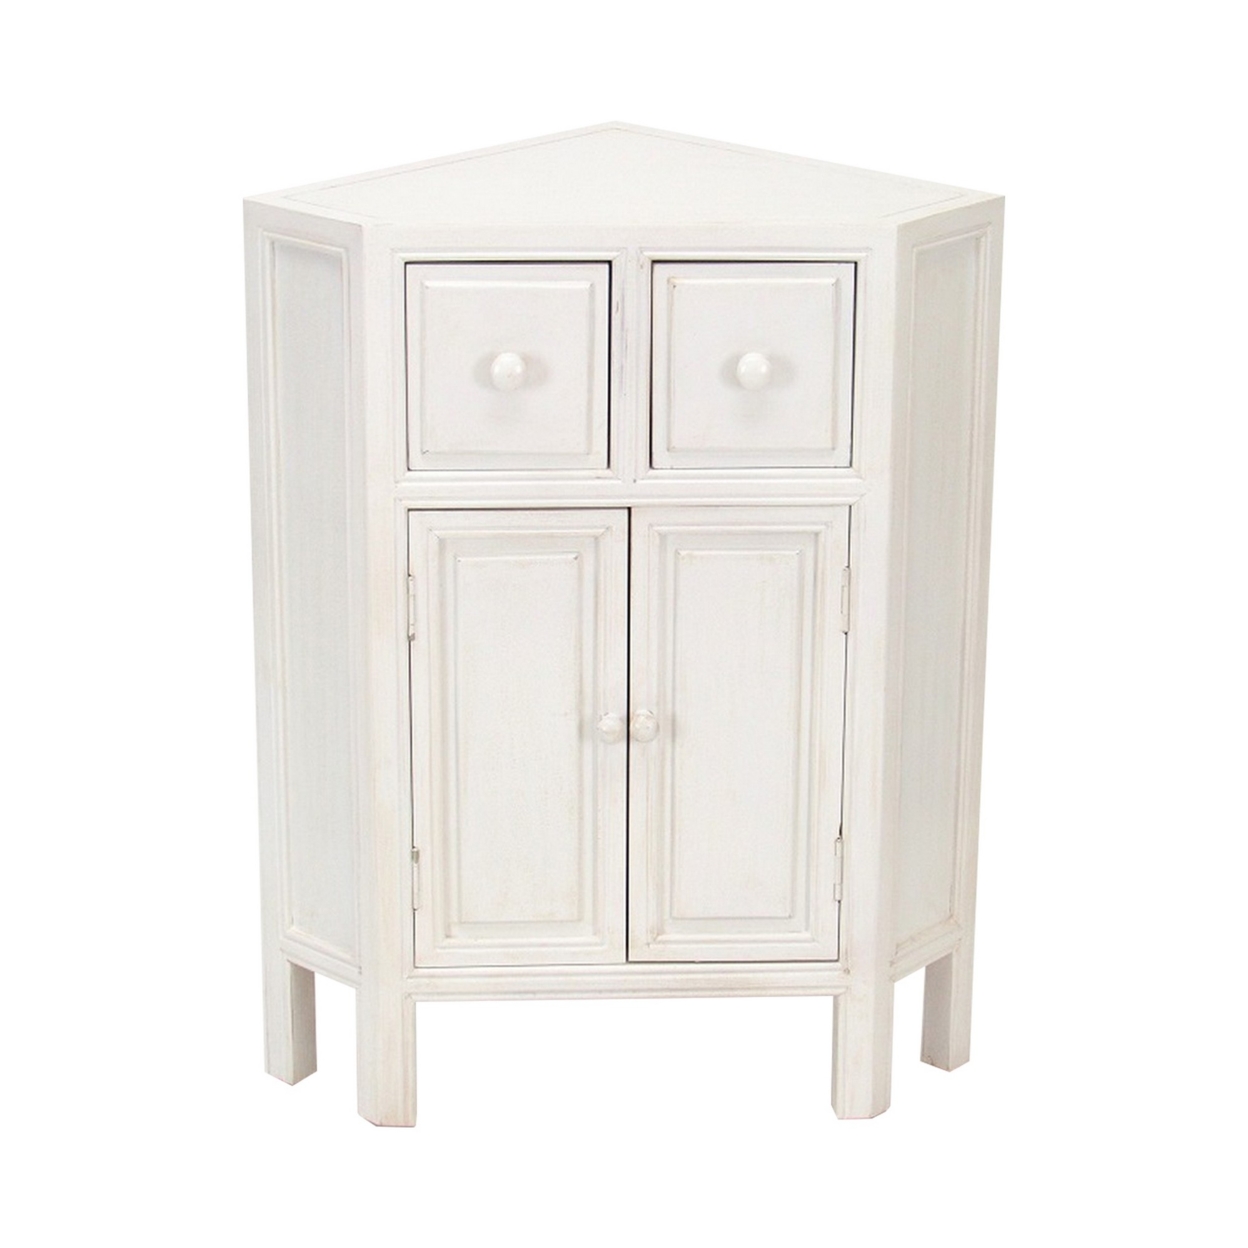 Wooden Corner Cabinet With 2 Drawers And 2 Doors, White- Saltoro Sherpi